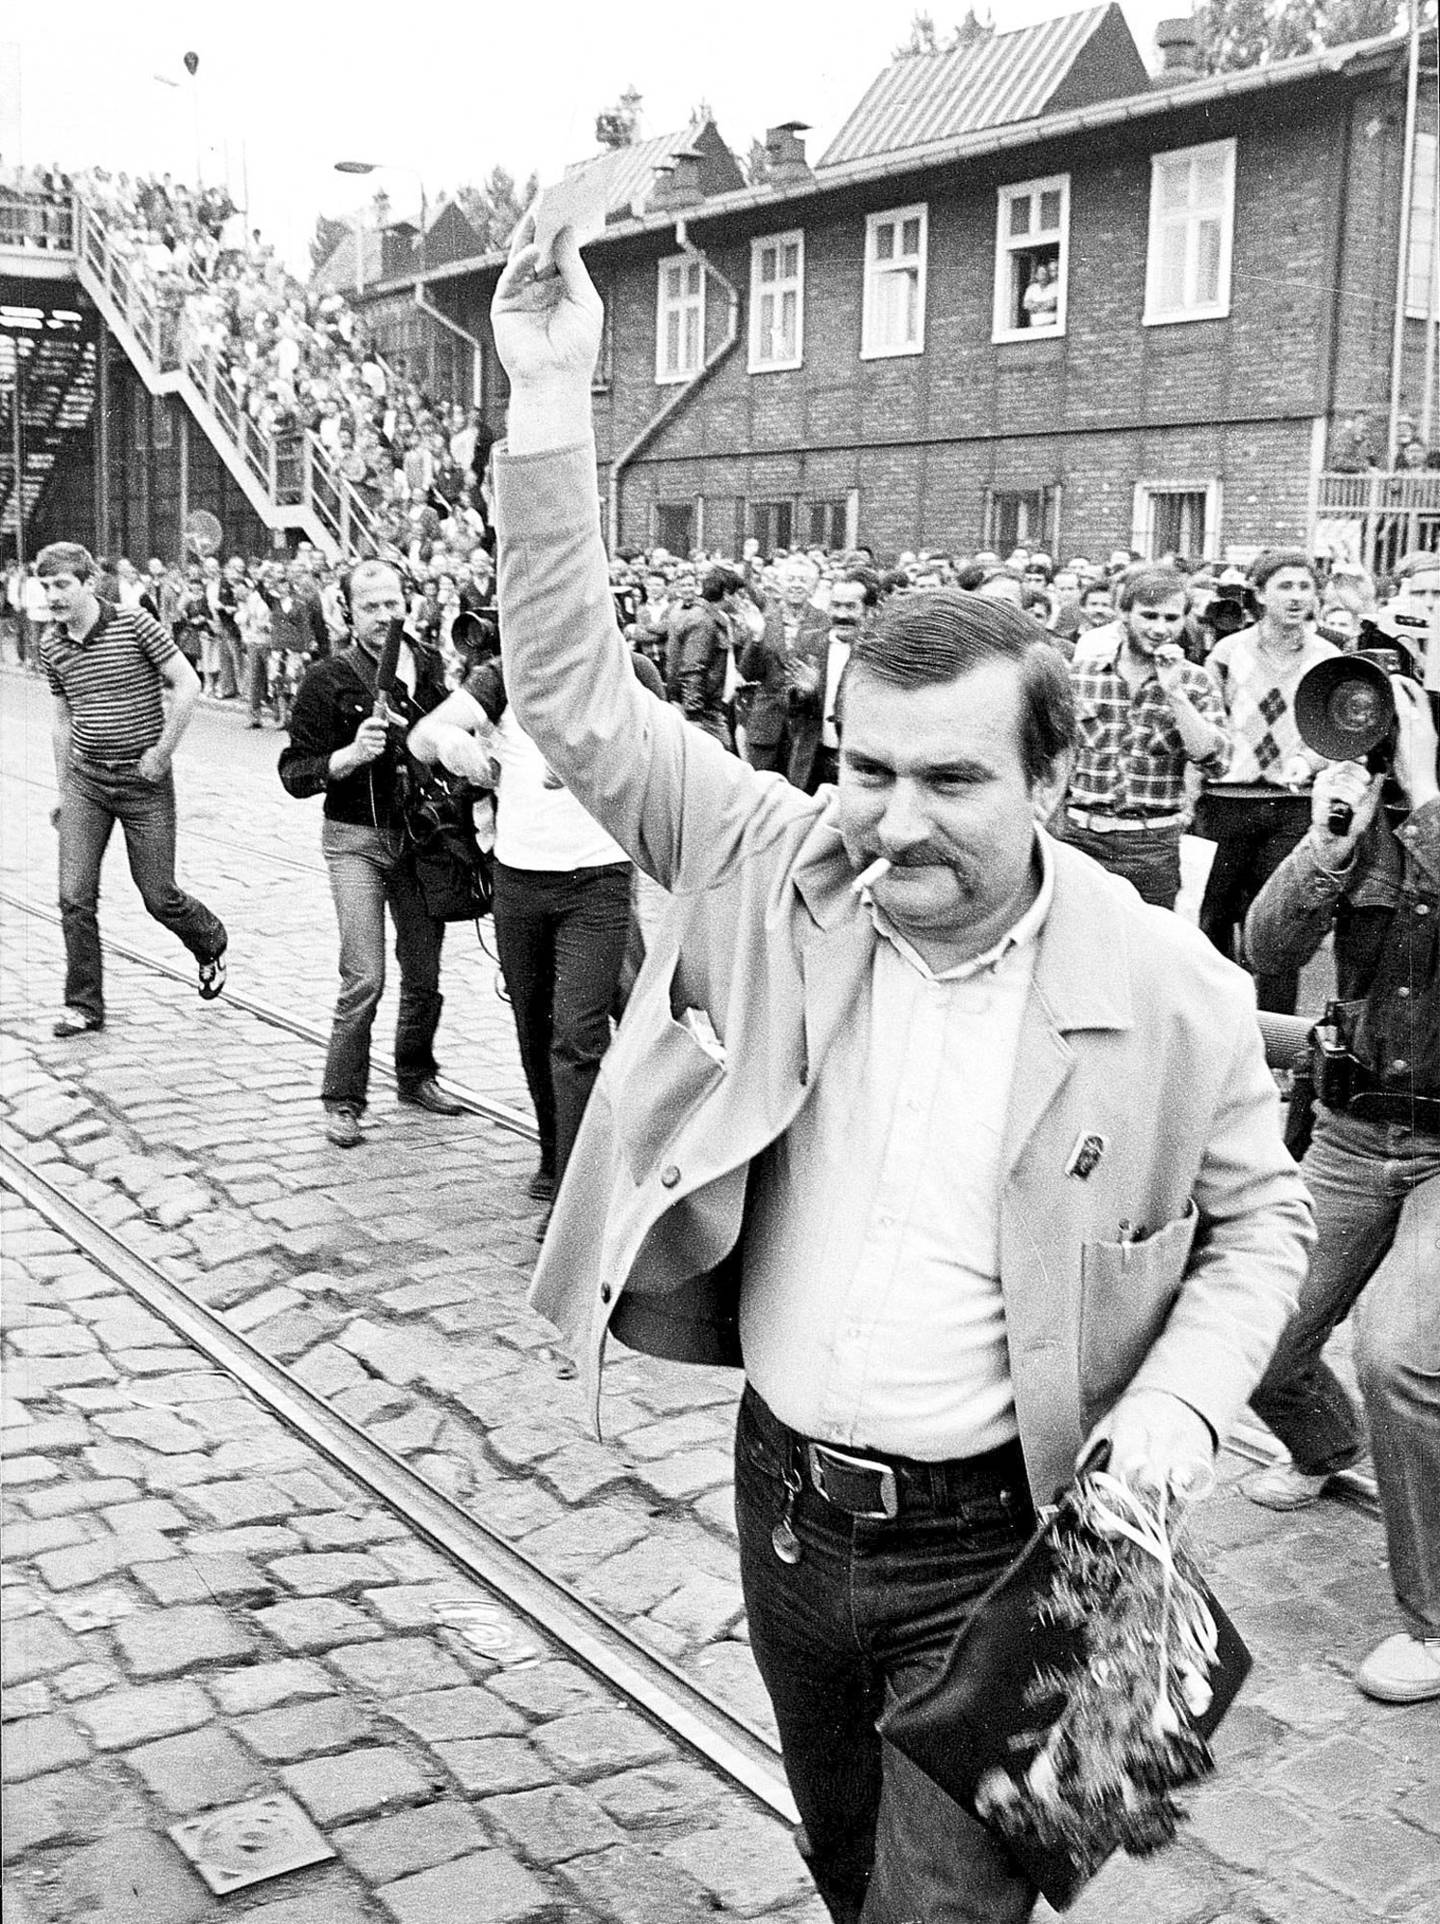 For 17 år siden organiserte Lech Walesa sine arbeidskamerater i den frie fagforeningen Solidaritet, som i 1989 styrtet kommunistregimet. Idag mister resten av arbeiderne på Gdansk-verftet jobben. (NTB/AP-arkivfoto)